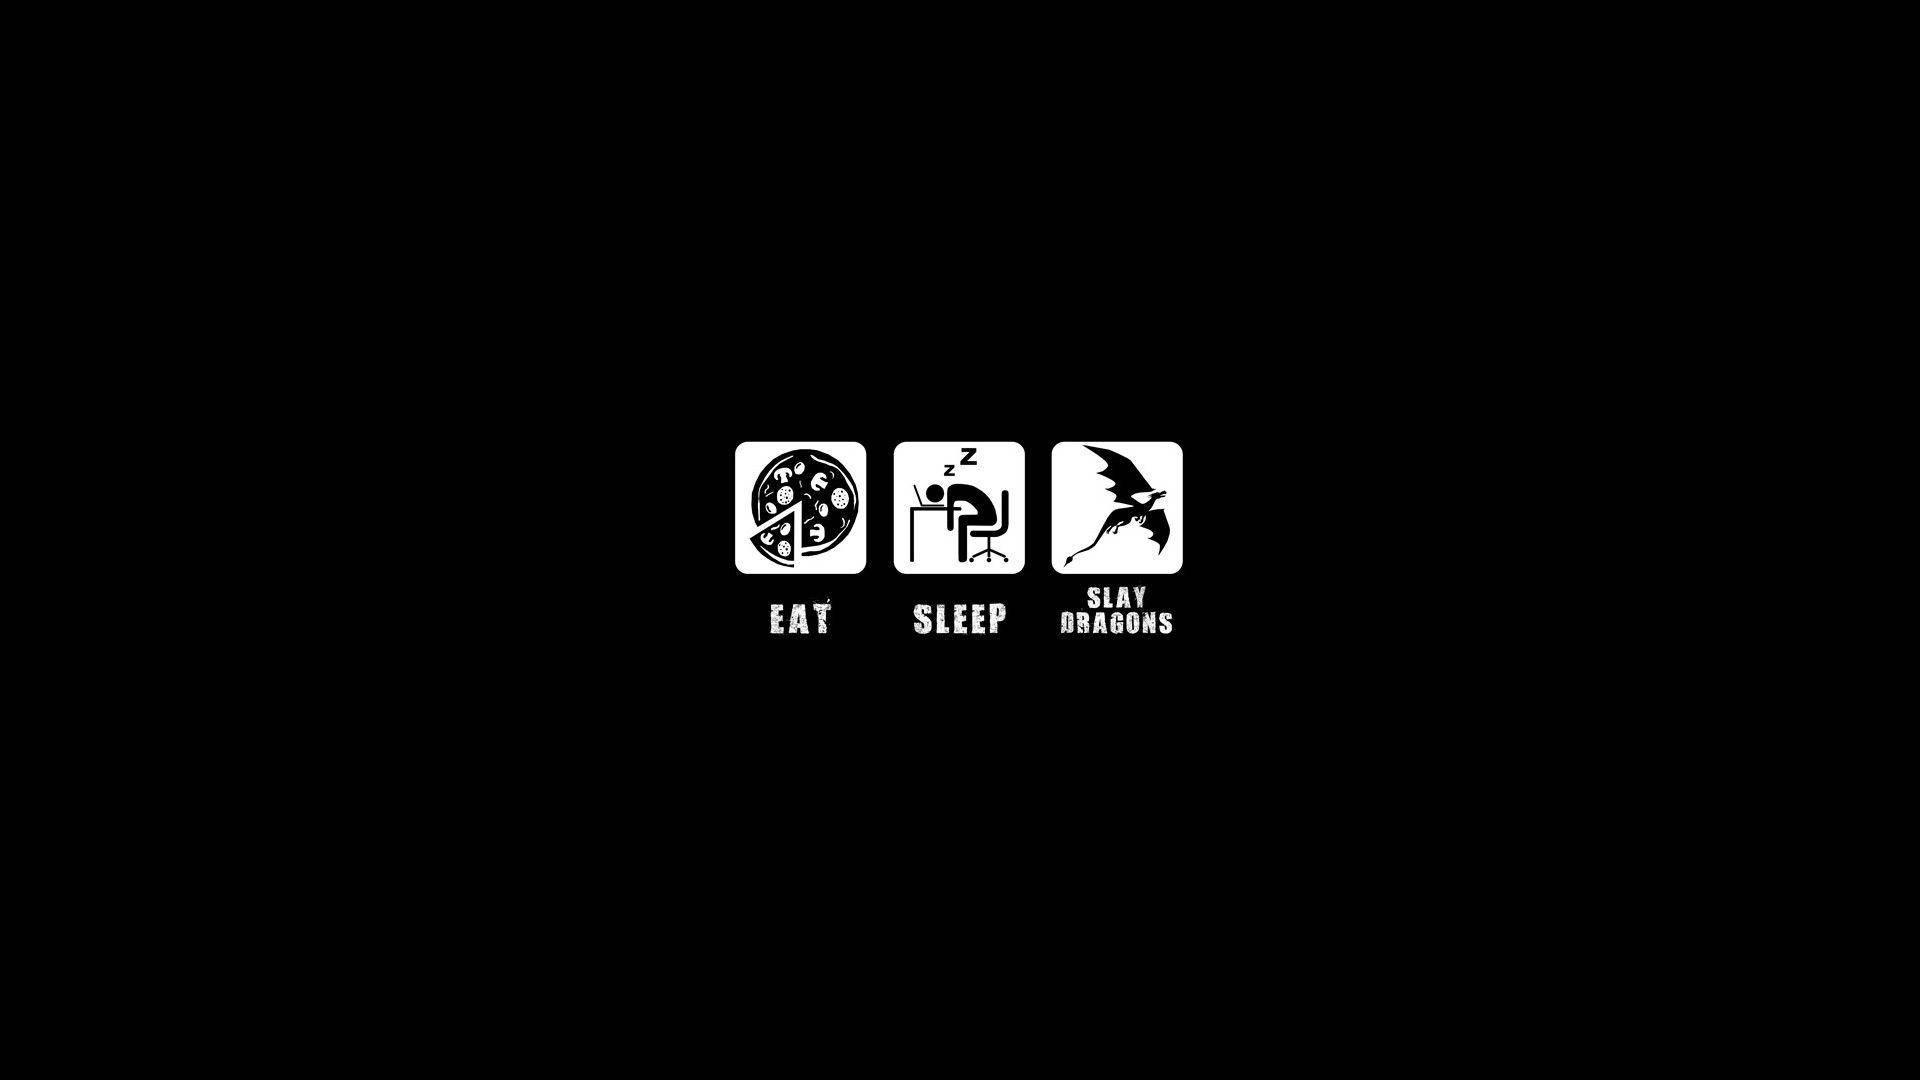 Simple Black Eat Sleep Slay Dragons Background